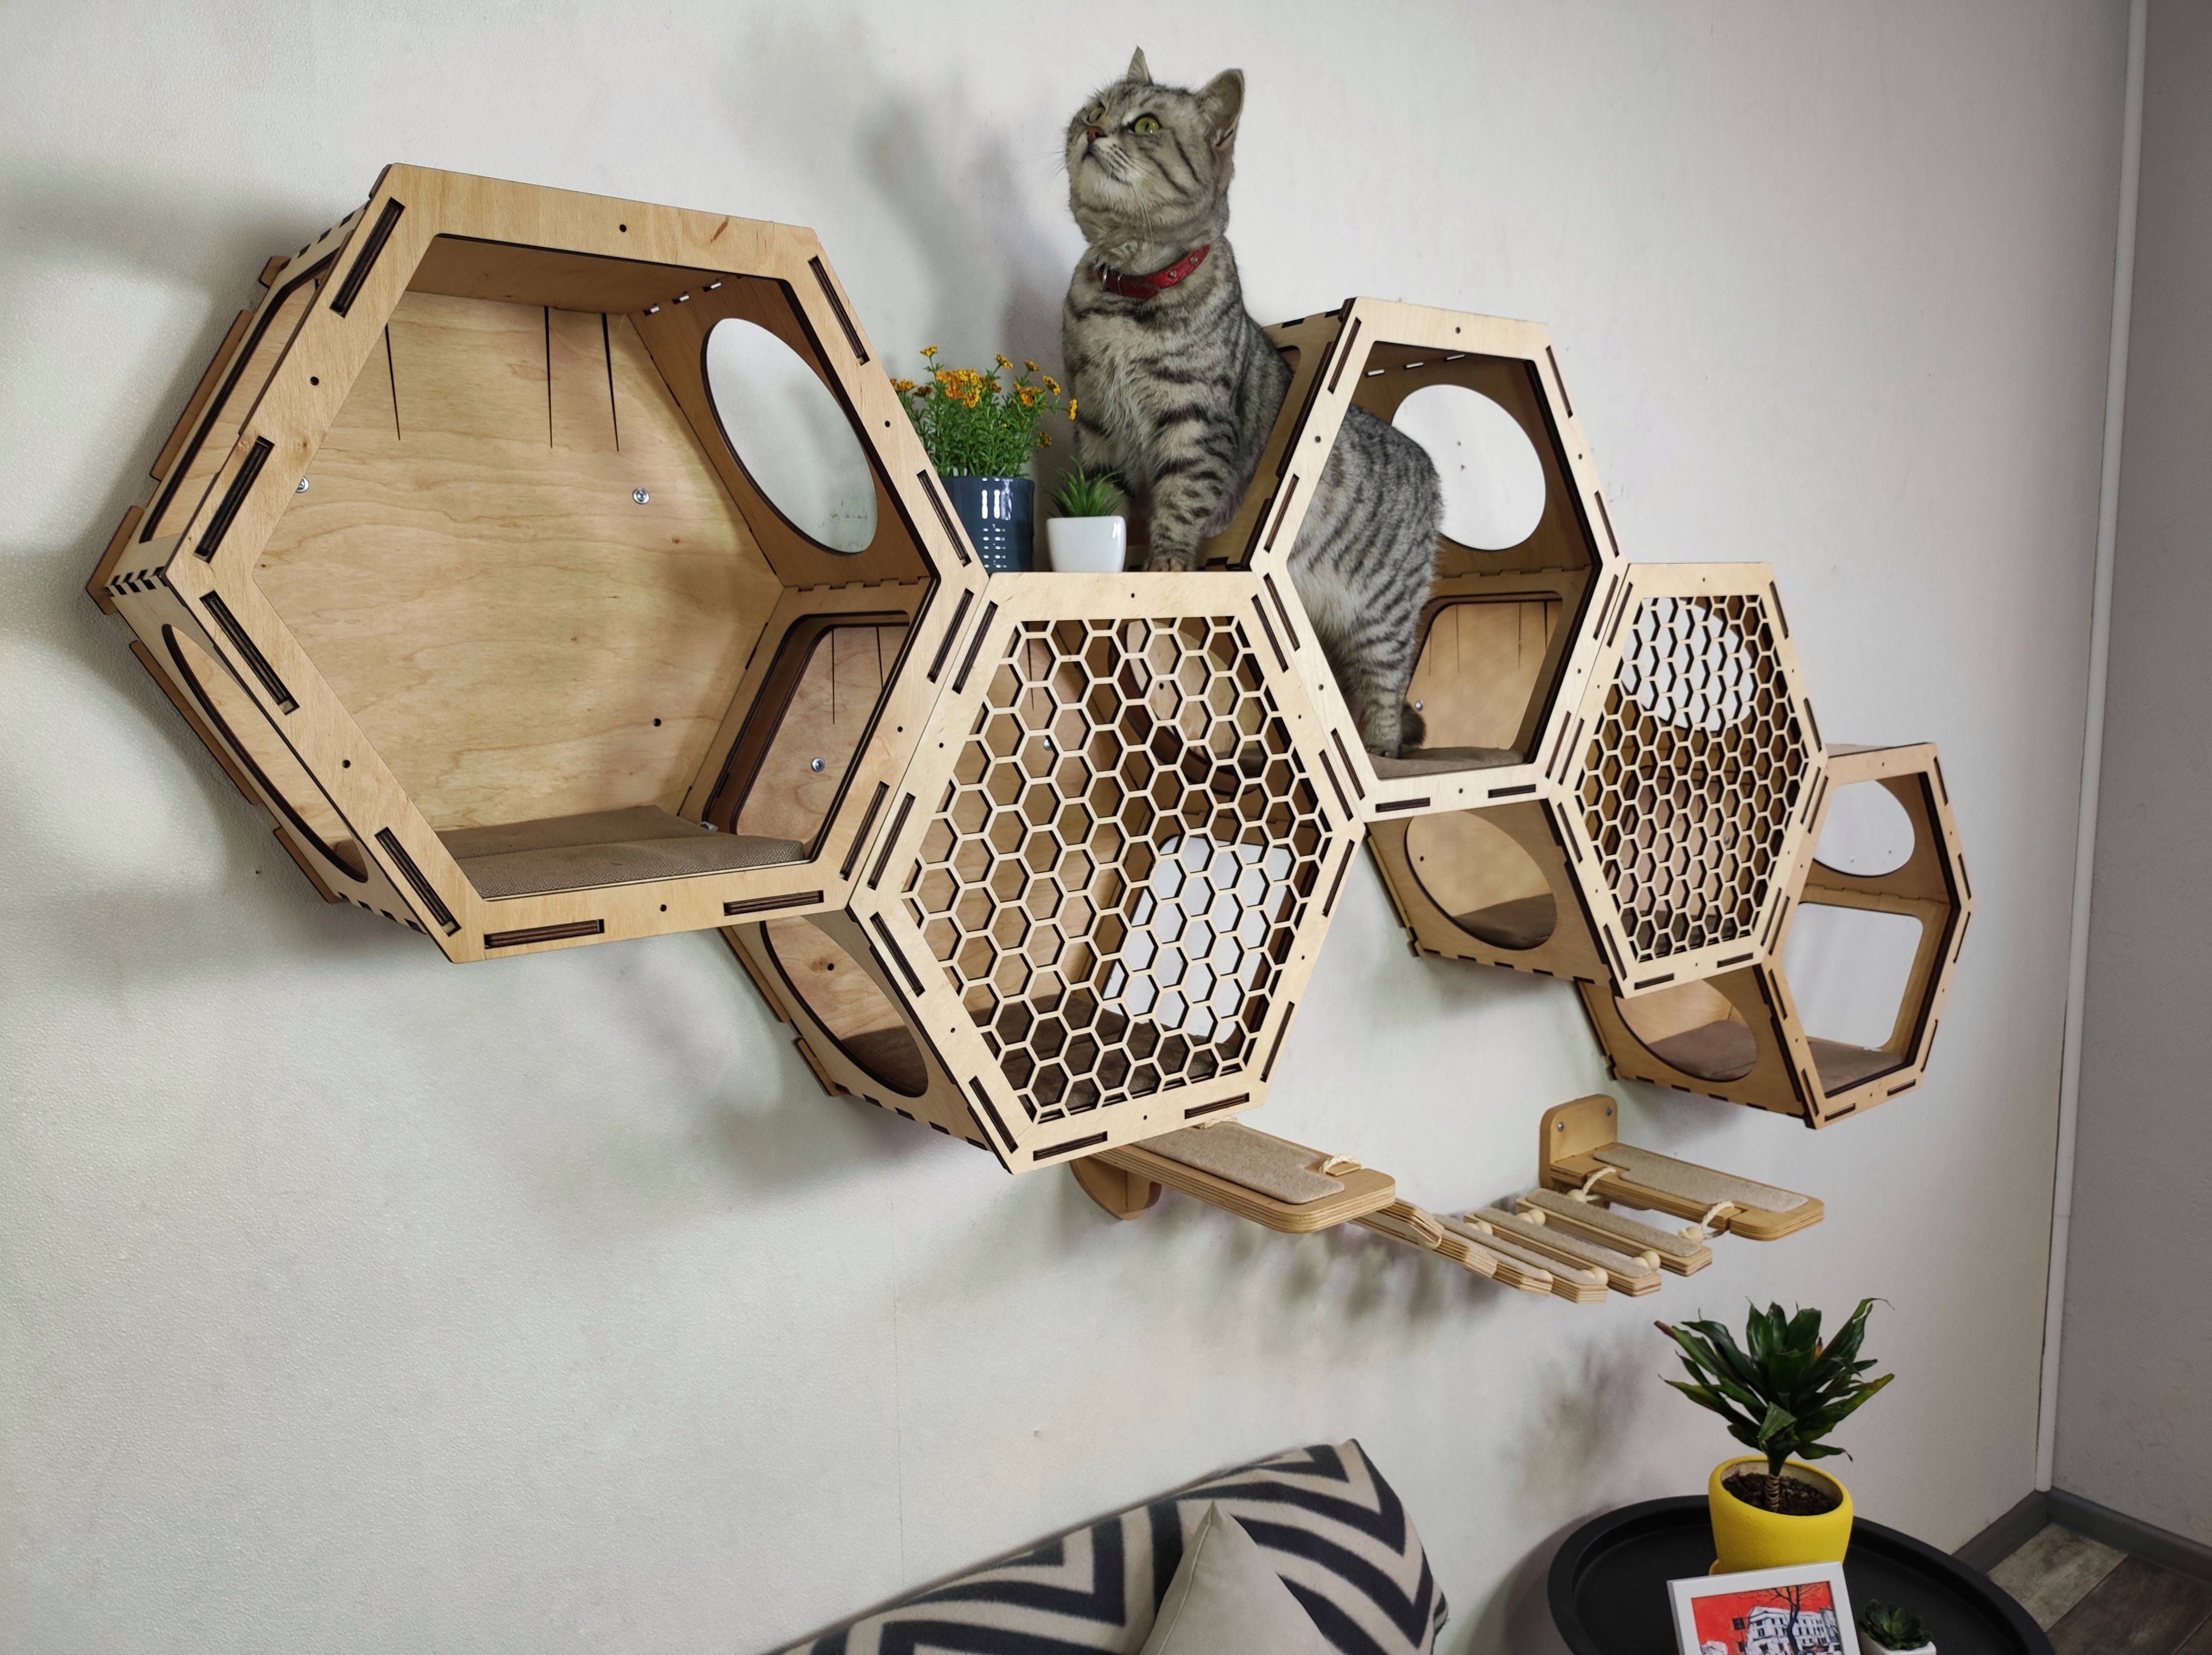 5 Hexagonal Shelves & Cat bridge